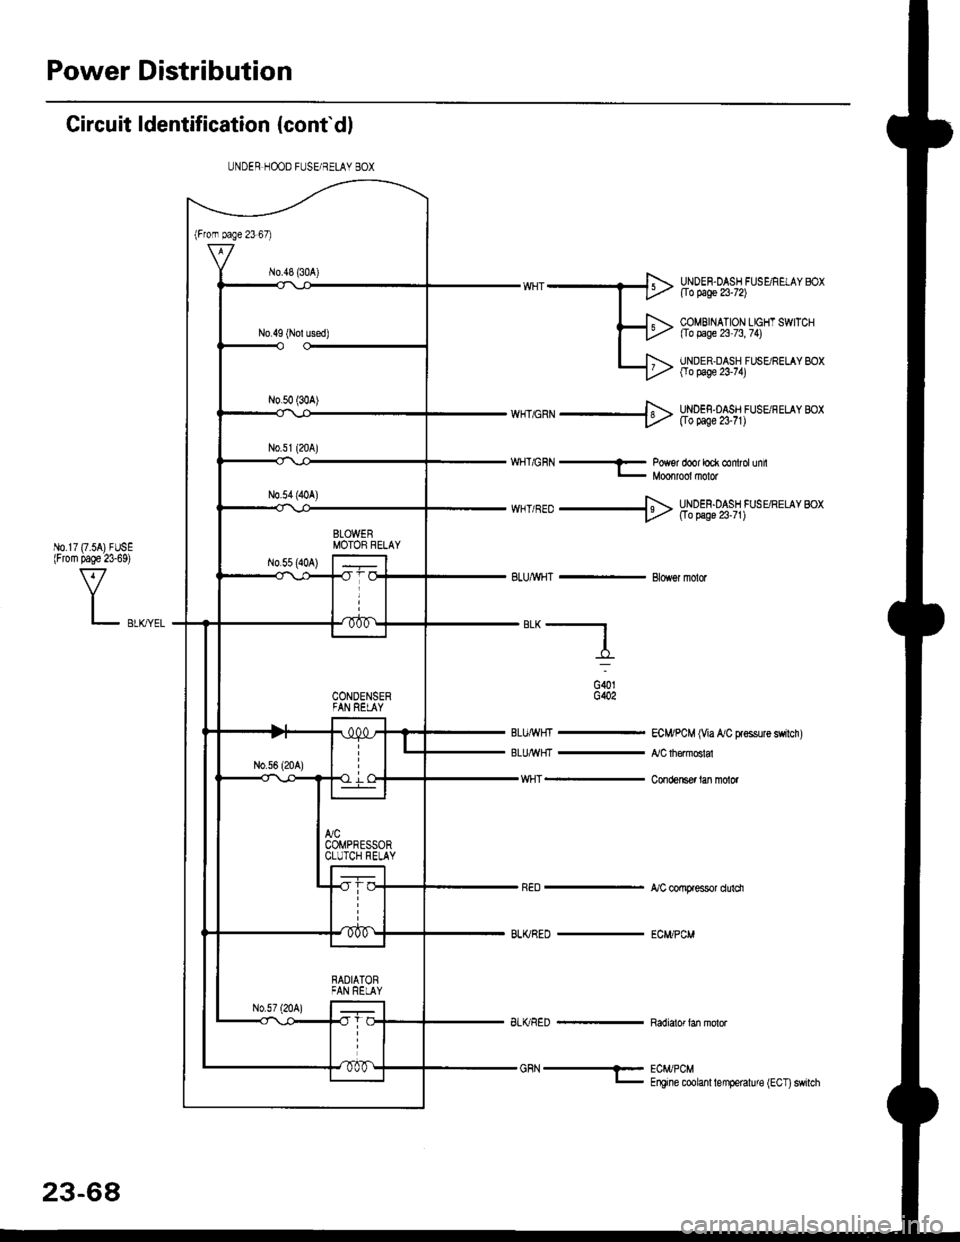 HONDA CIVIC 1998 6.G Manual PDF Power Distribution
Circuit ldentification (conf dl
ECI4/PCM (Via A/C Fsssure switch)
,VC th€modA
Con(,ensef lan molor
A/C comFessor dulci
ECWPCM
UNDER HOOD FUSE/BELAY BOX
"*-f_
v{HT -
BLI(/RED -
UND